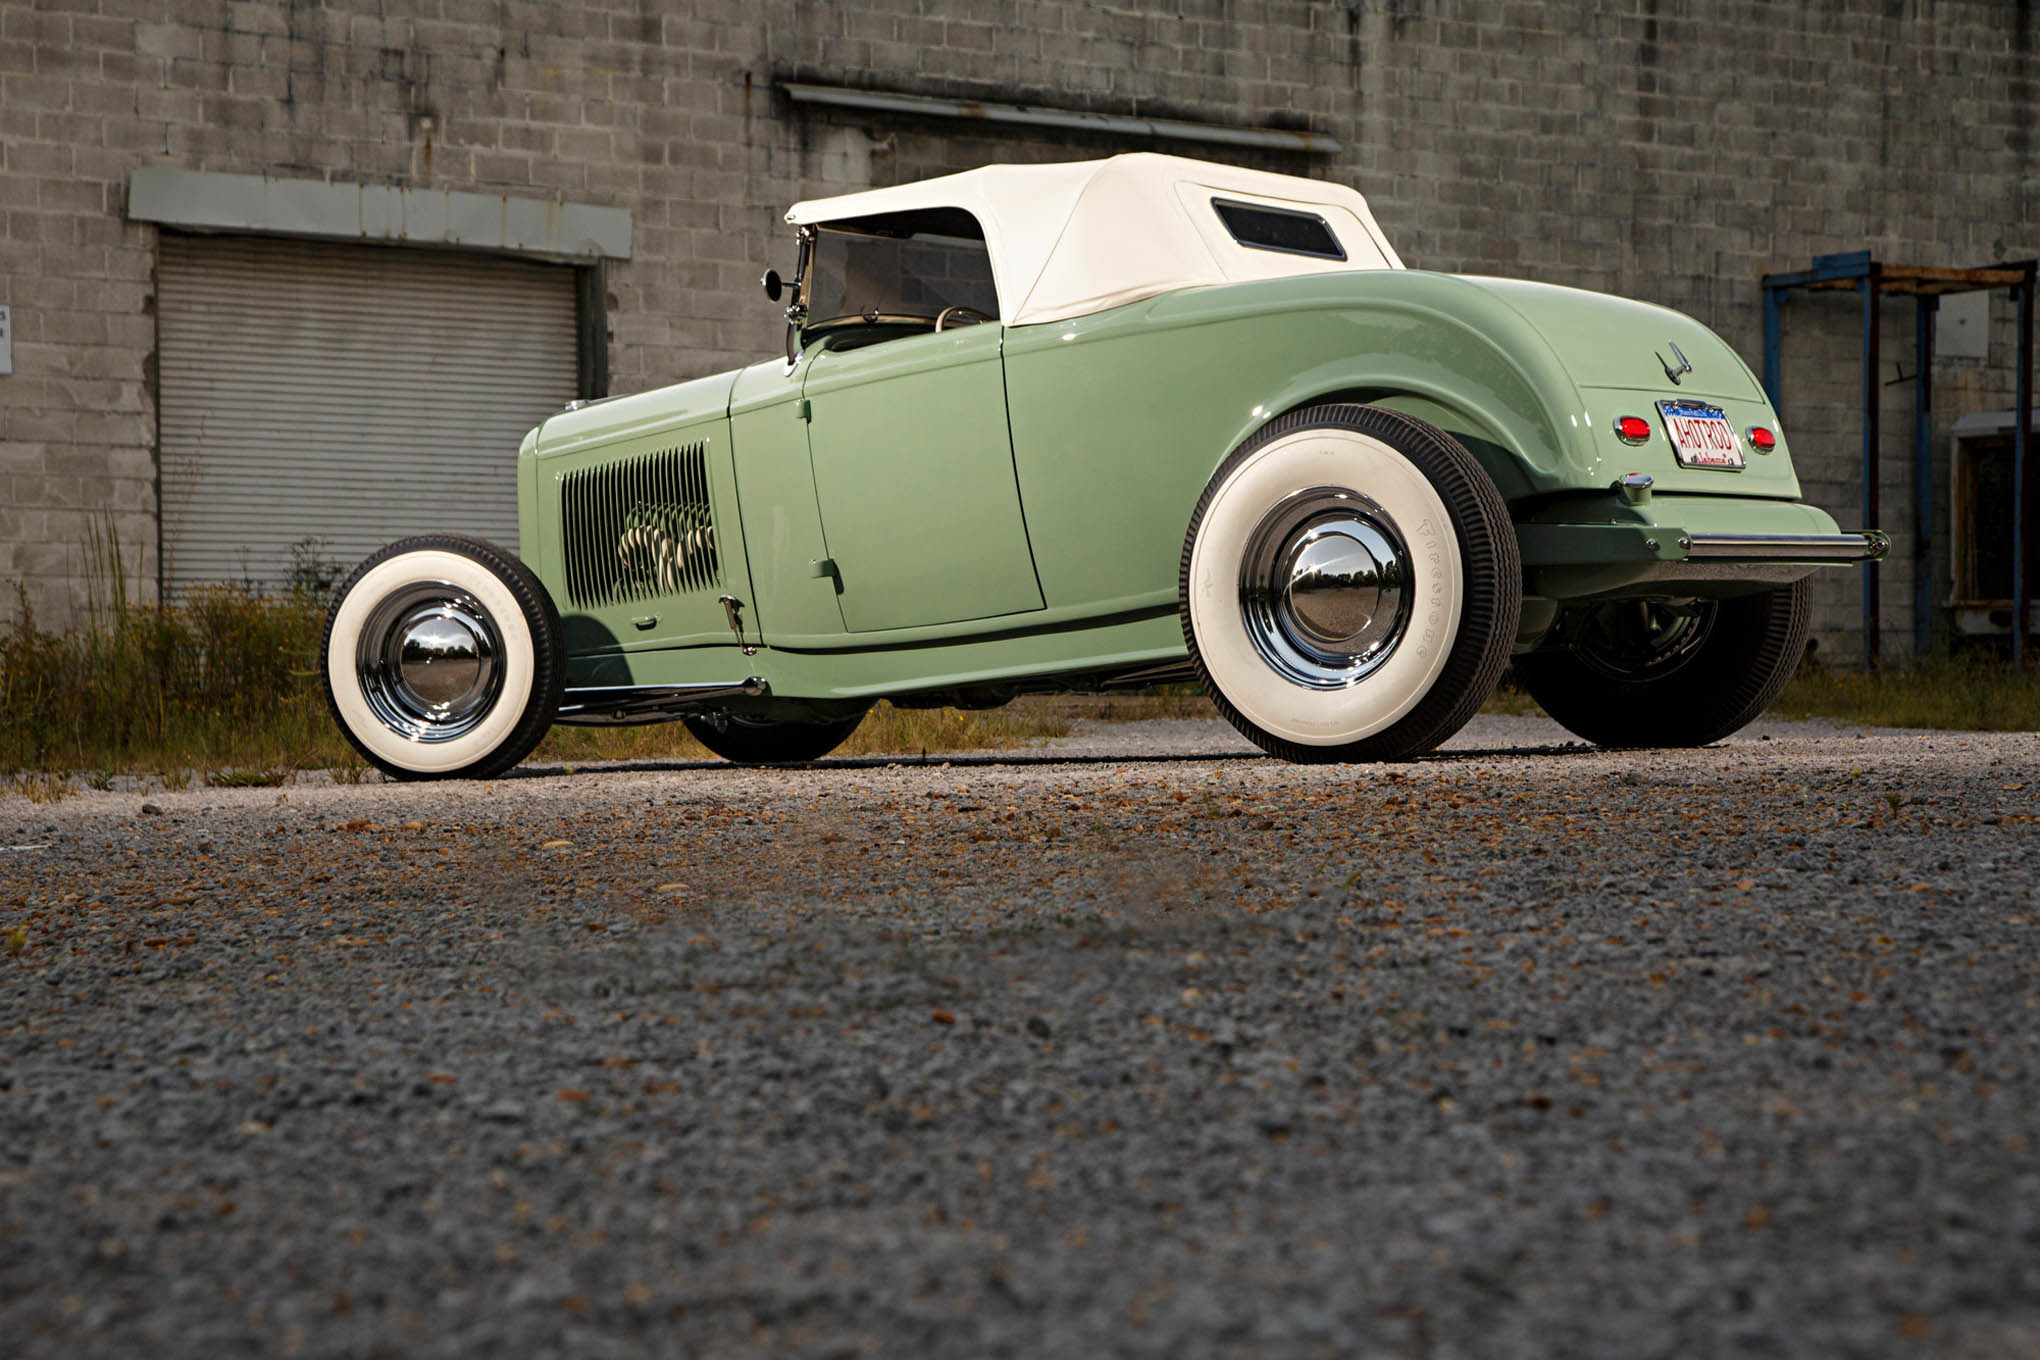 vehicles, ford roadster, 1932 ford roadster, hot rod, vintage car, ford Desktop home screen Wallpaper